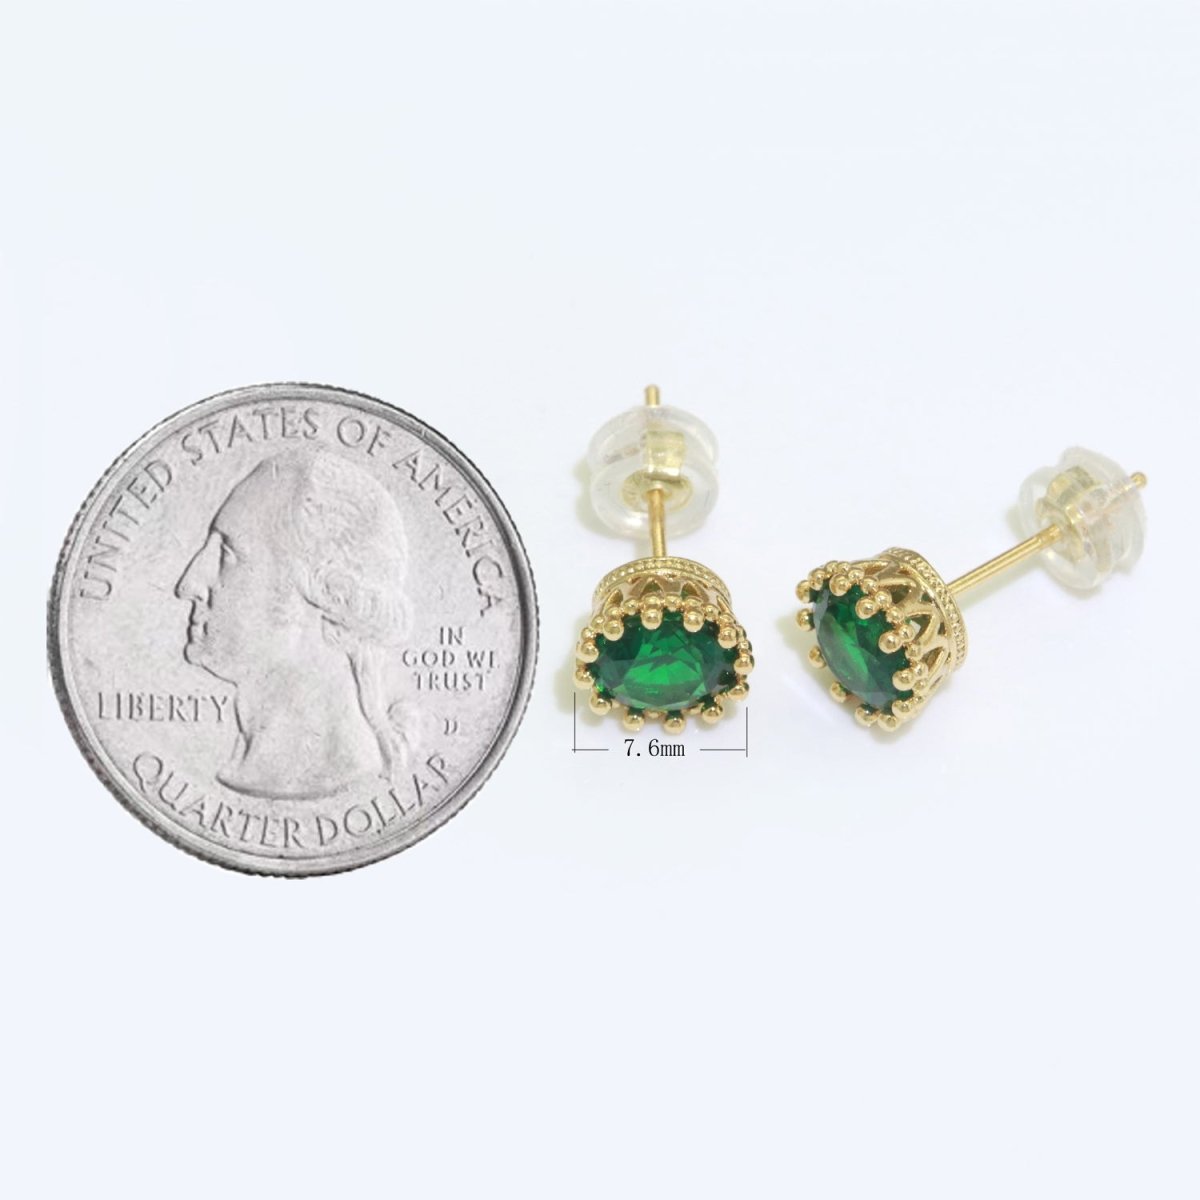 Green Emerald Stud Earring 18k Gold Filled Round Circle Stud Minimalist Earring T-061 - DLUXCA